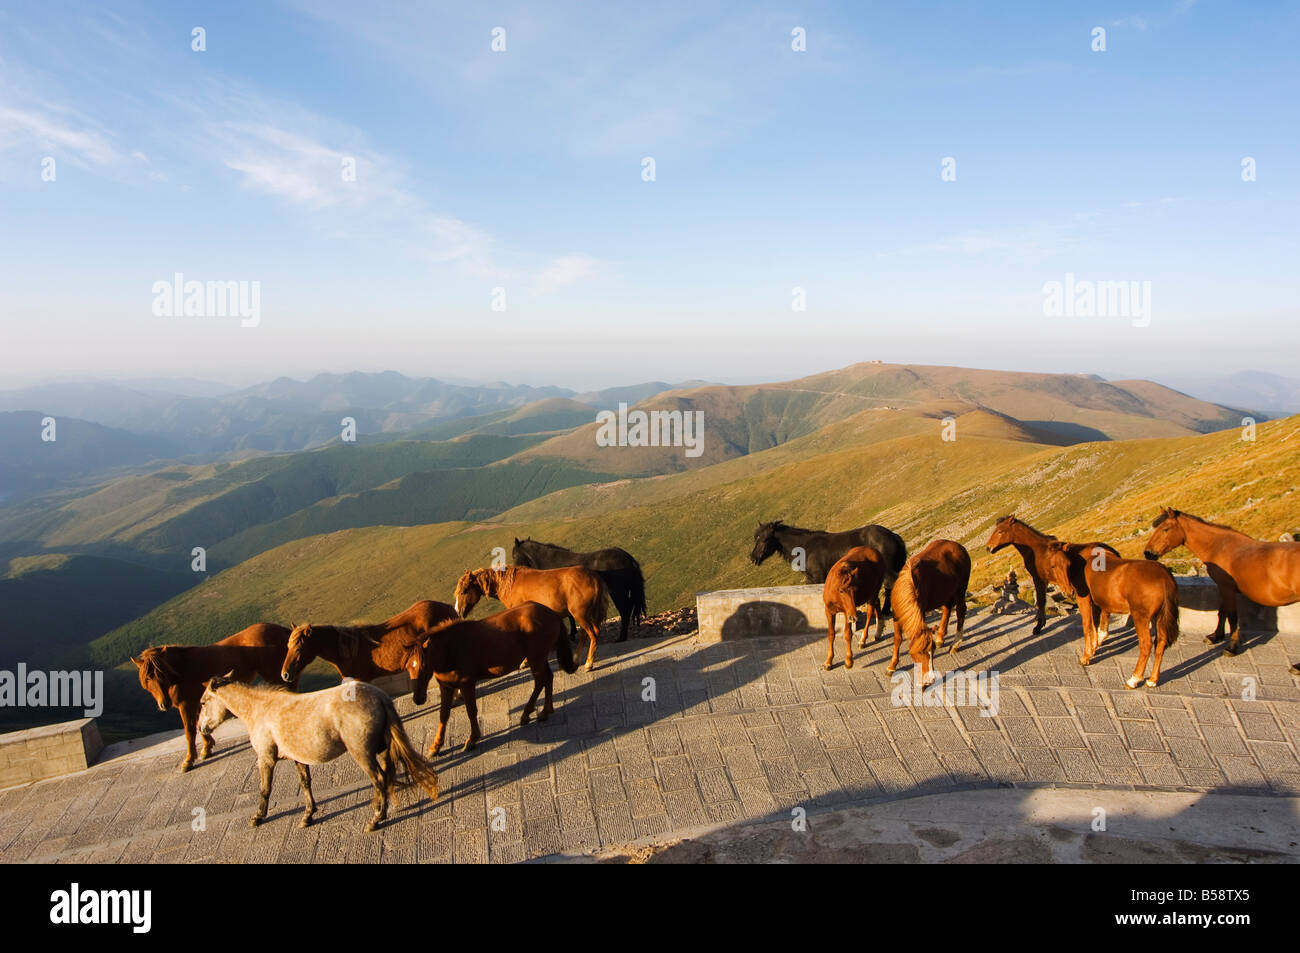 Horses roaming free, Wutaishan (Five Terrace Mountain) one of China's sacred Buddhist mountain ranges, Shanxi province, China Stock Photo